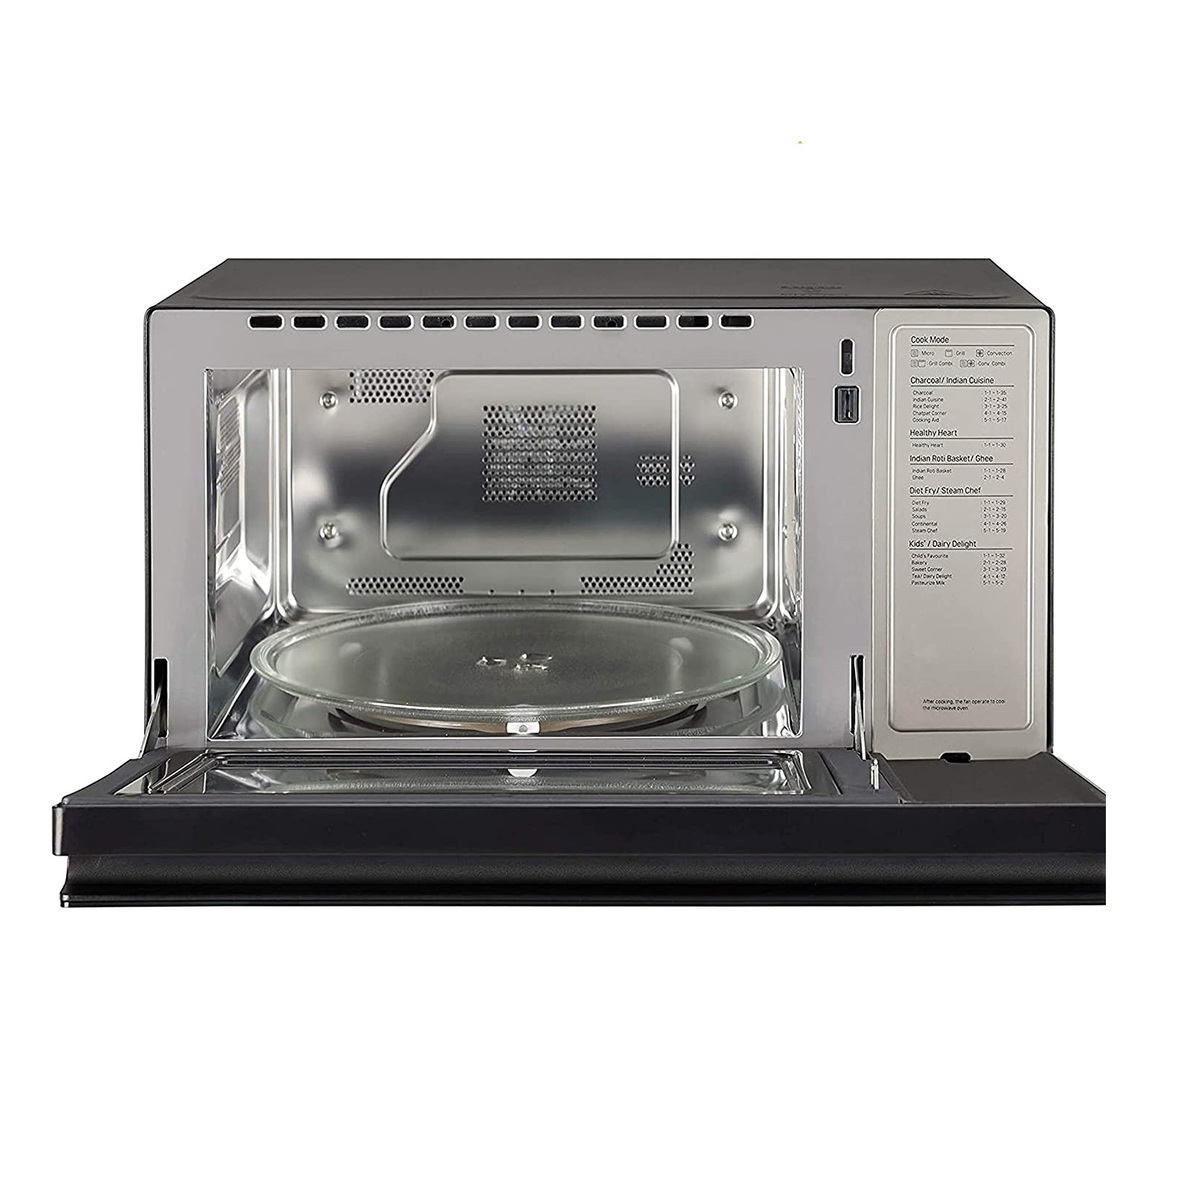 LG Charcol Microwave Oven MJEN326TL 32Ltr